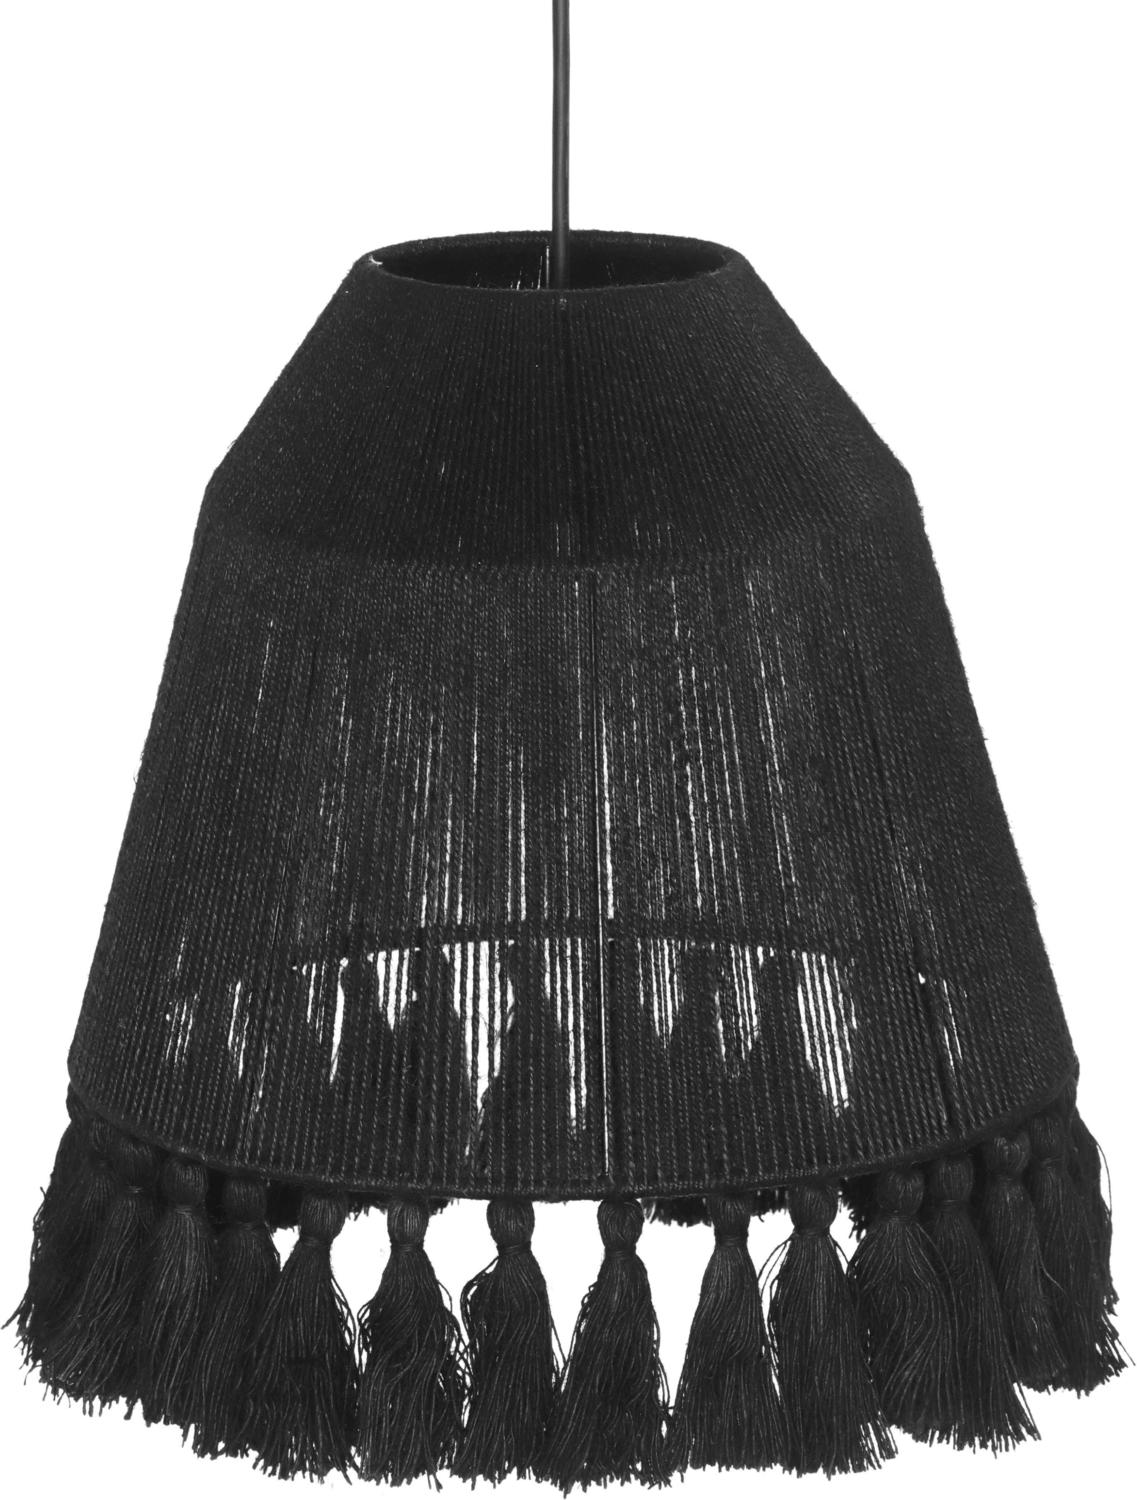 pendant light fitting ceiling rose Contemporary Design Furniture Pendants Black